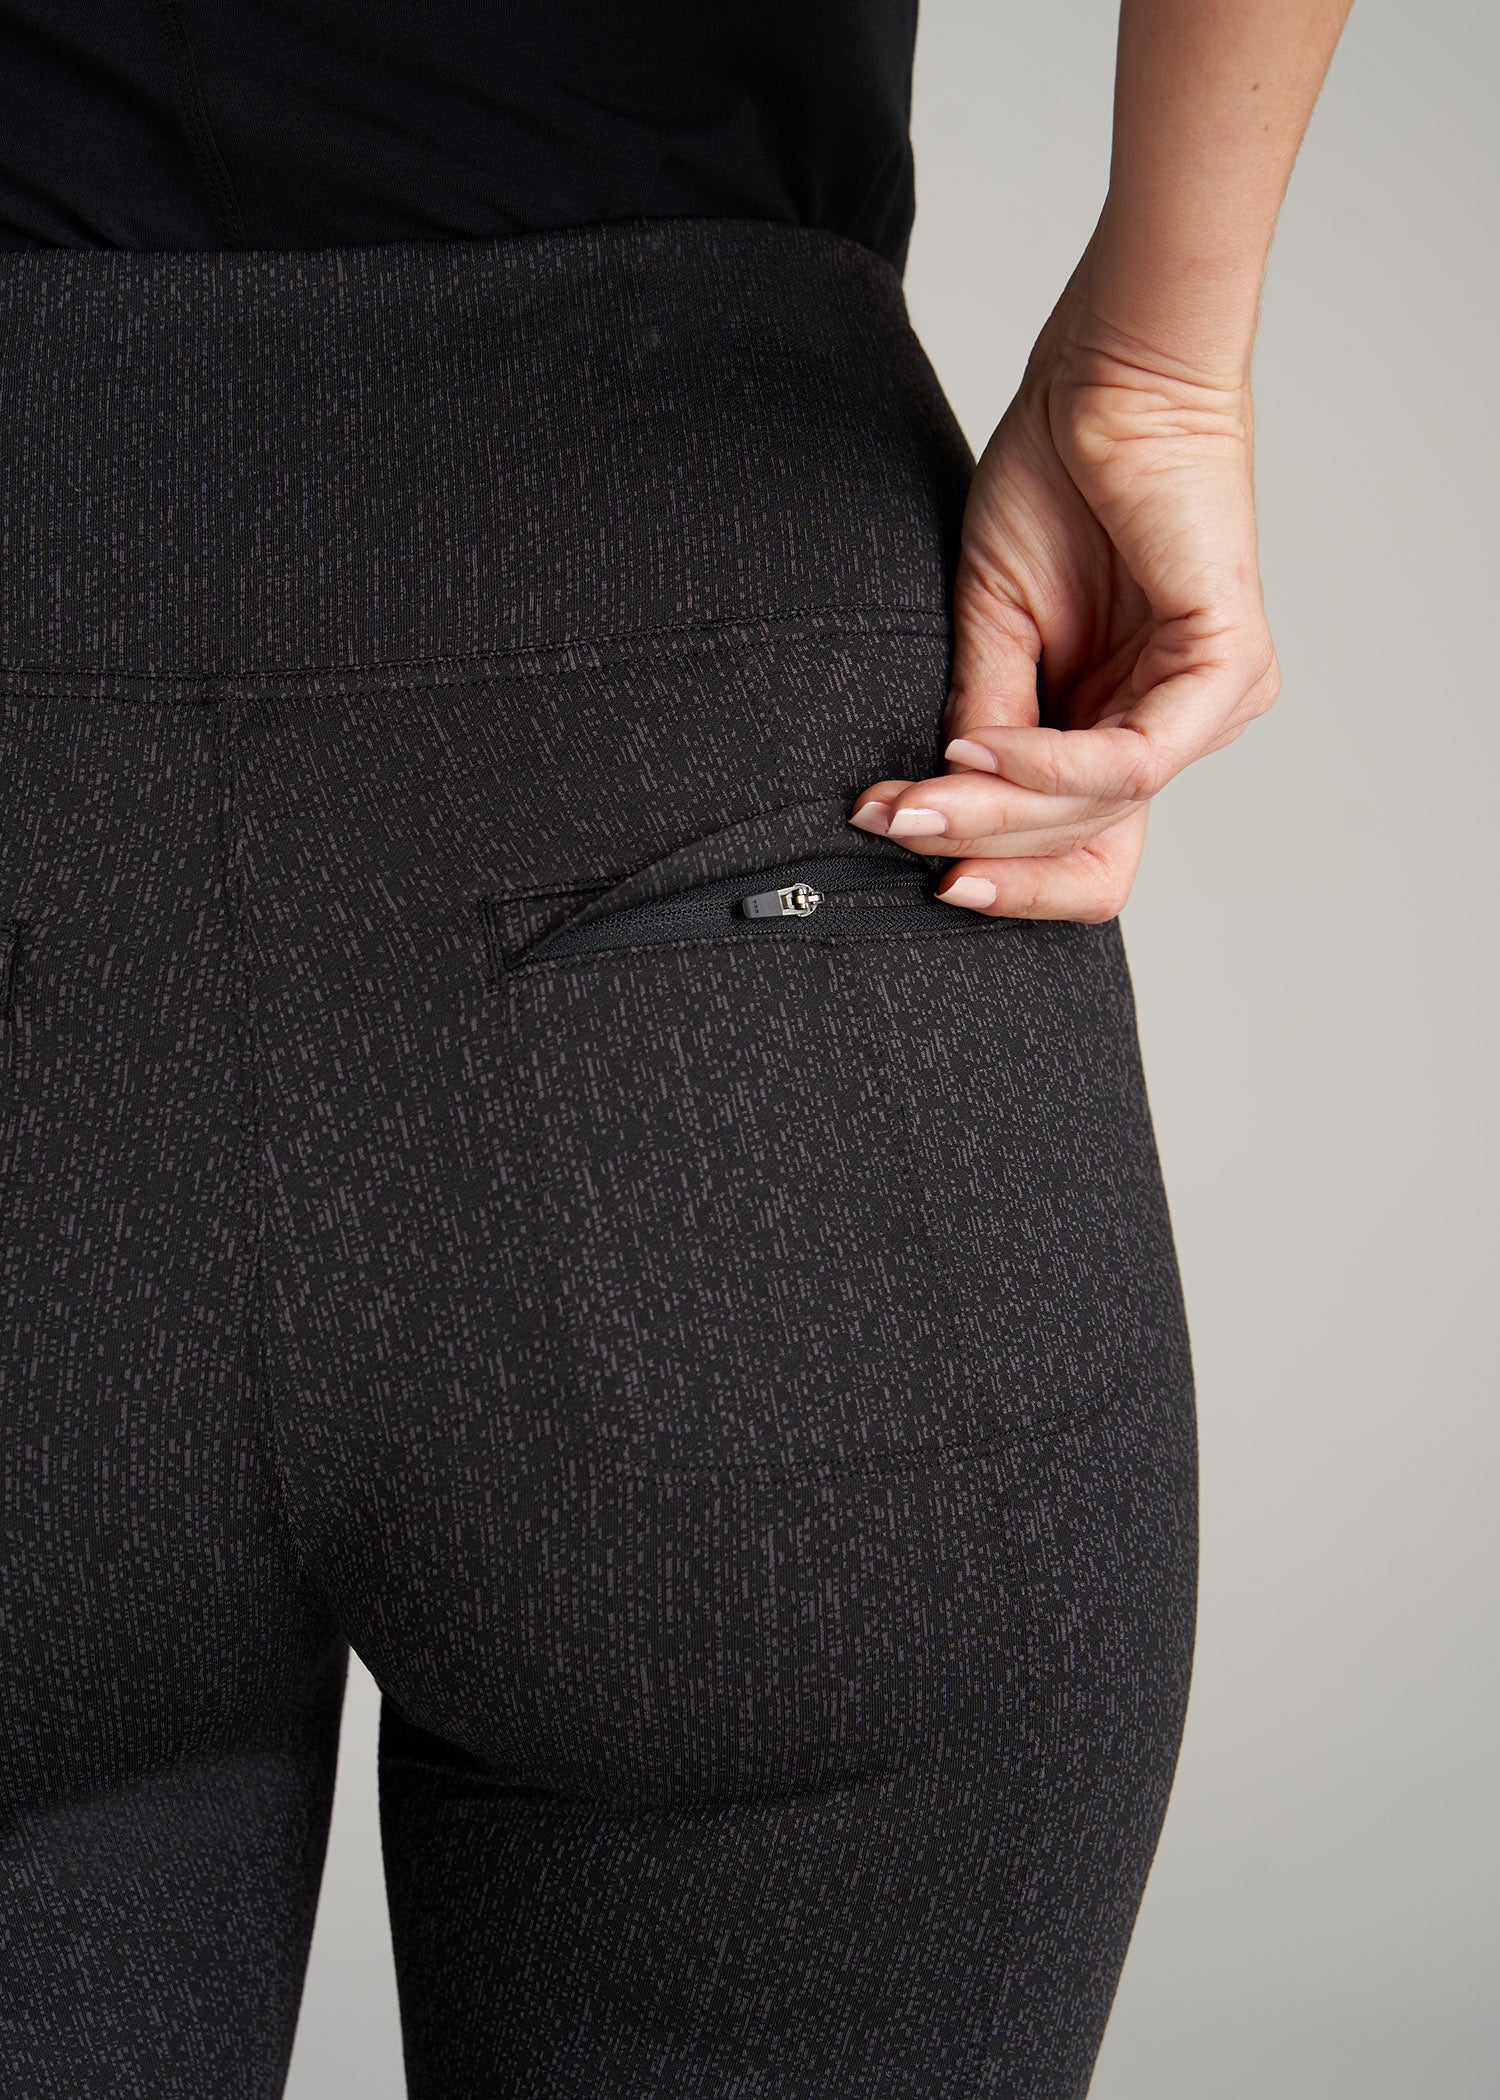 48 Wholesale Women Fashion Leggings With Back Pocket Design